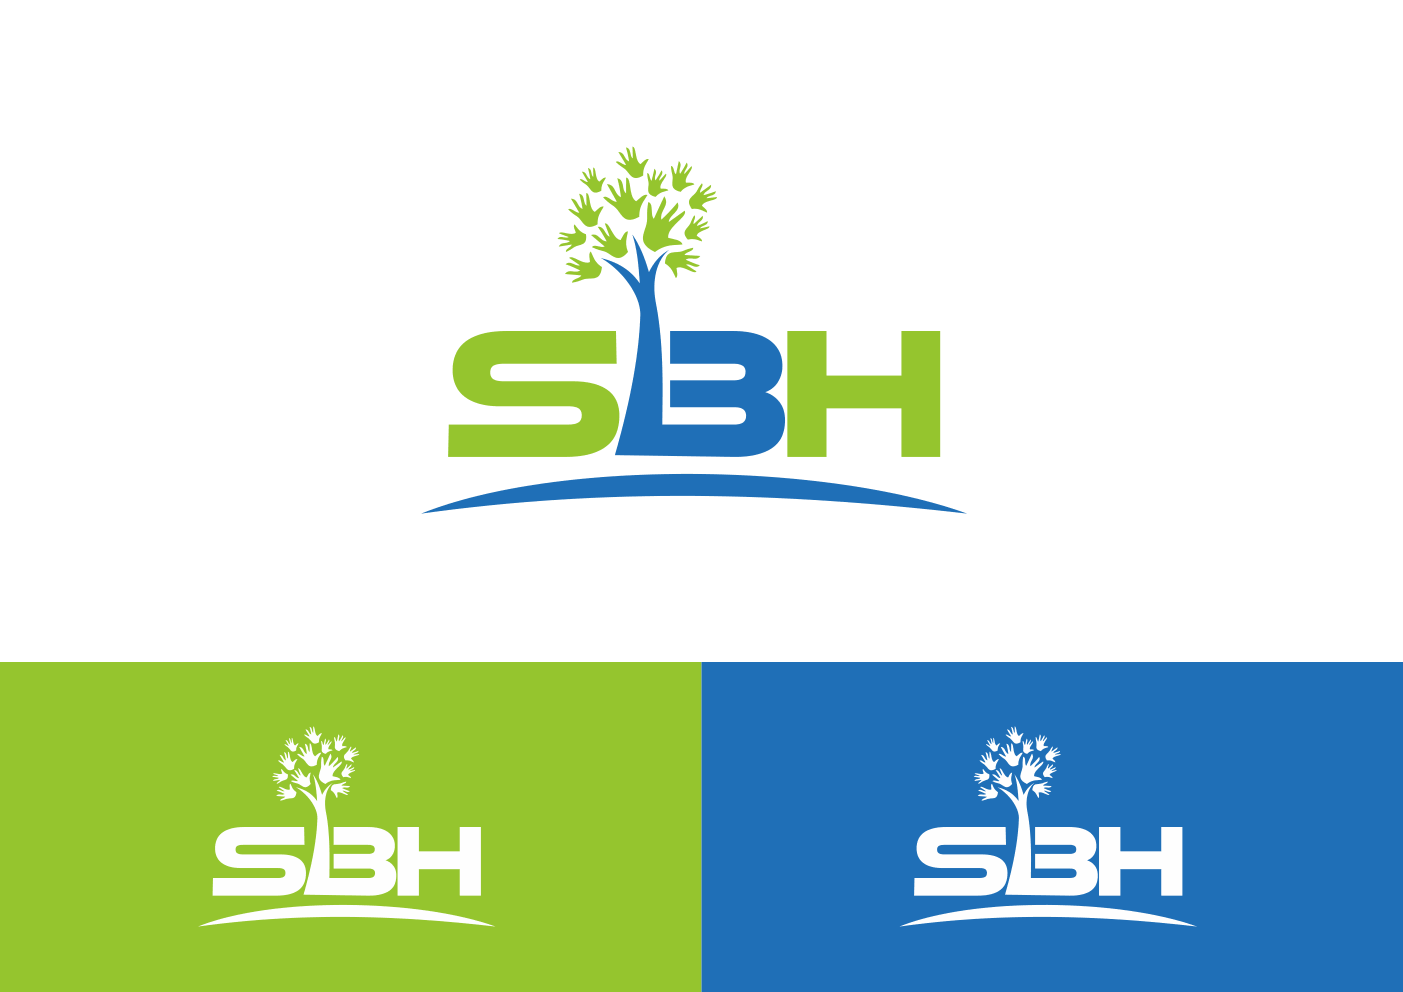 SBH Logo - Serious, Elegant, Community Service Logo Design for SBH line